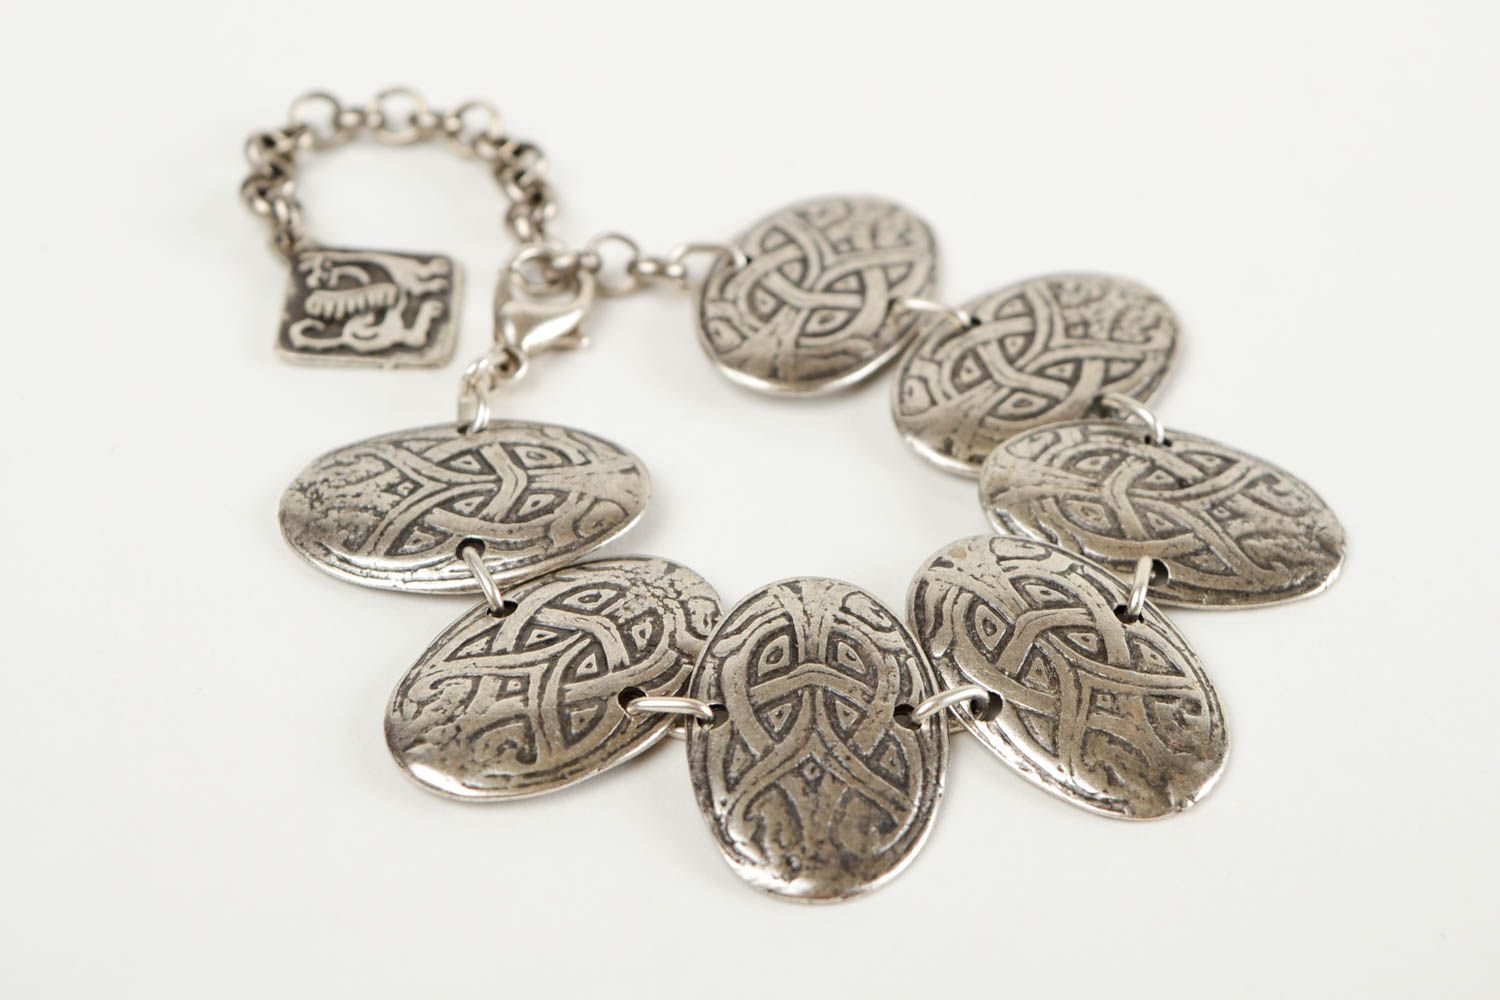 Unusual handmade wrist bracelet metal bracelet designs fashion tips gift ideas photo 4